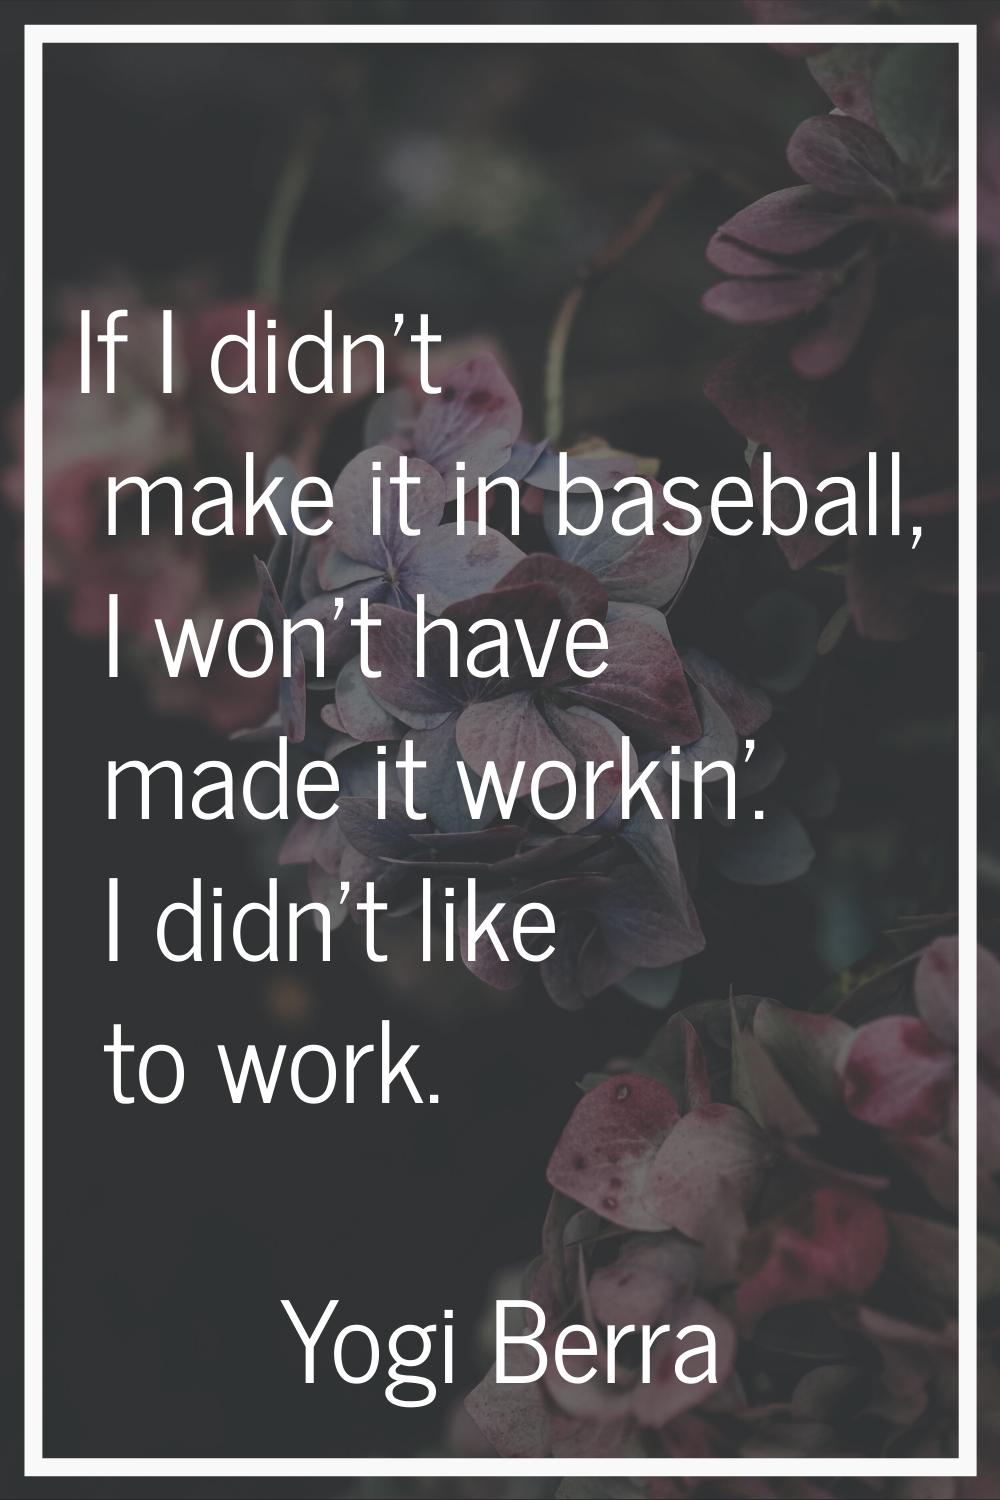 If I didn't make it in baseball, I won't have made it workin'. I didn't like to work.